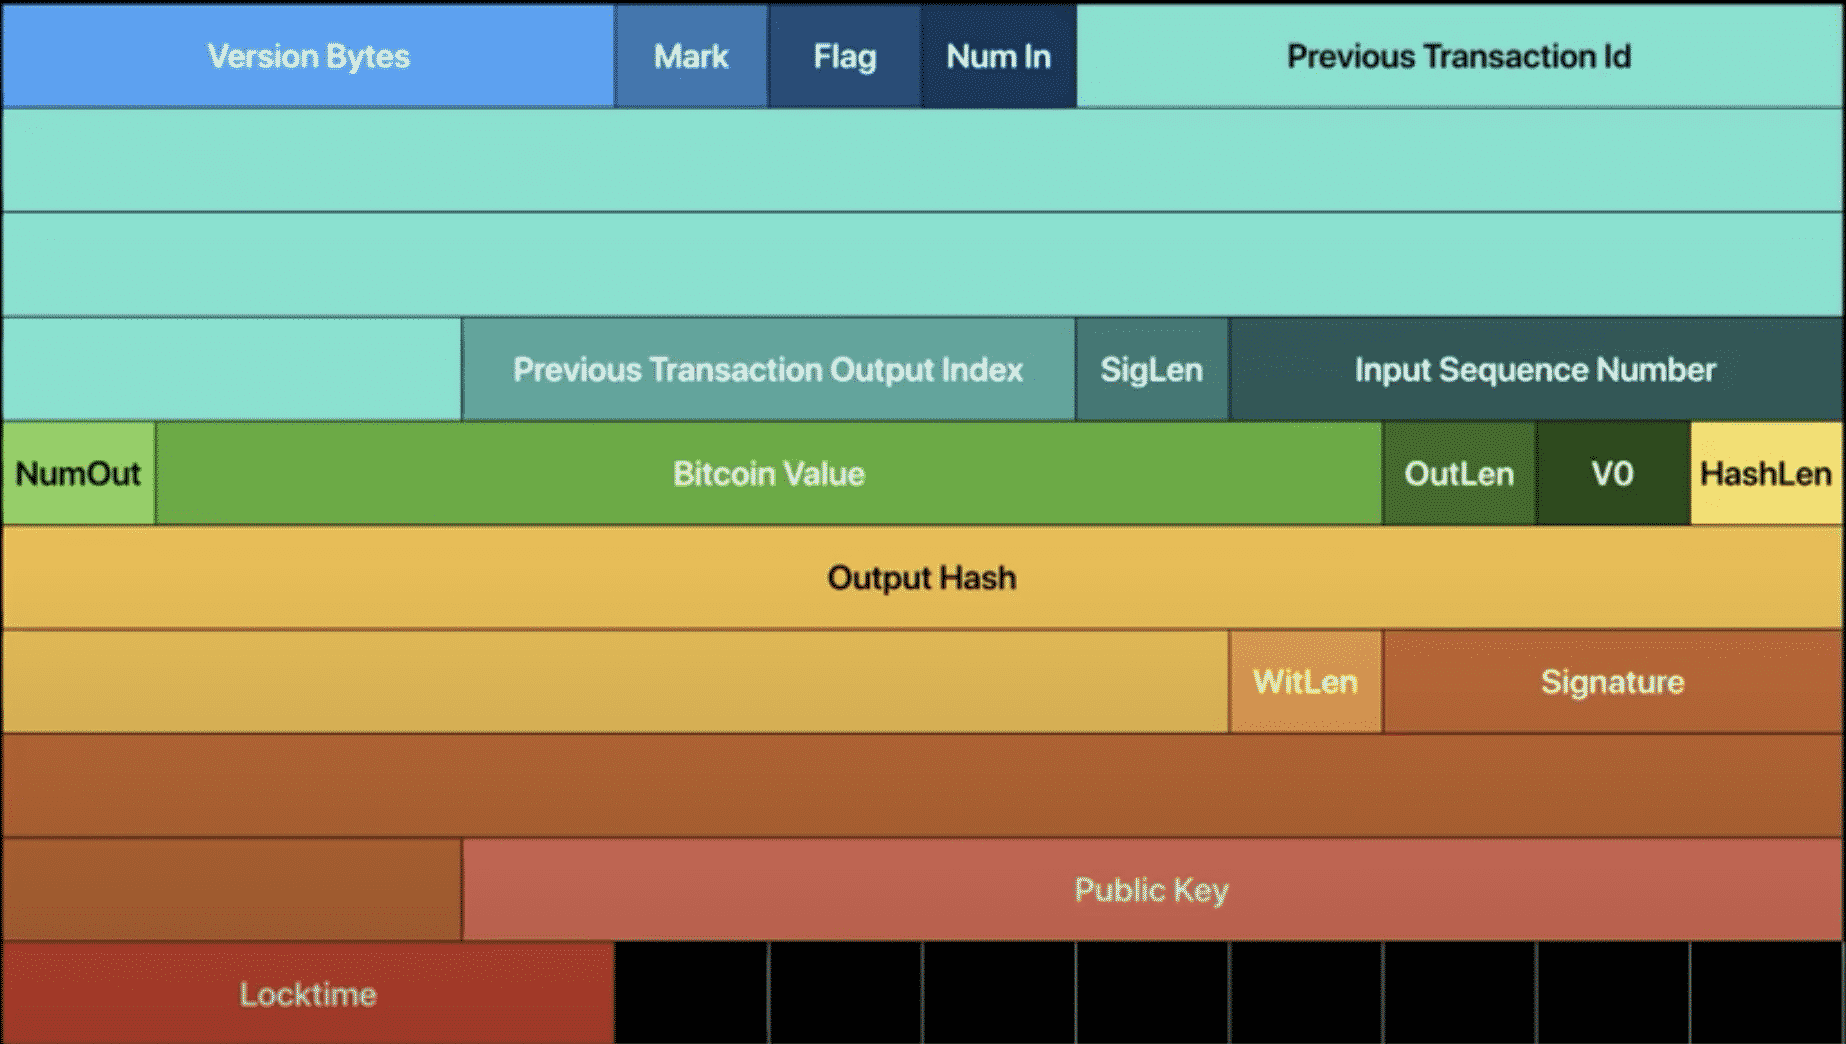 Bitcoin visualized